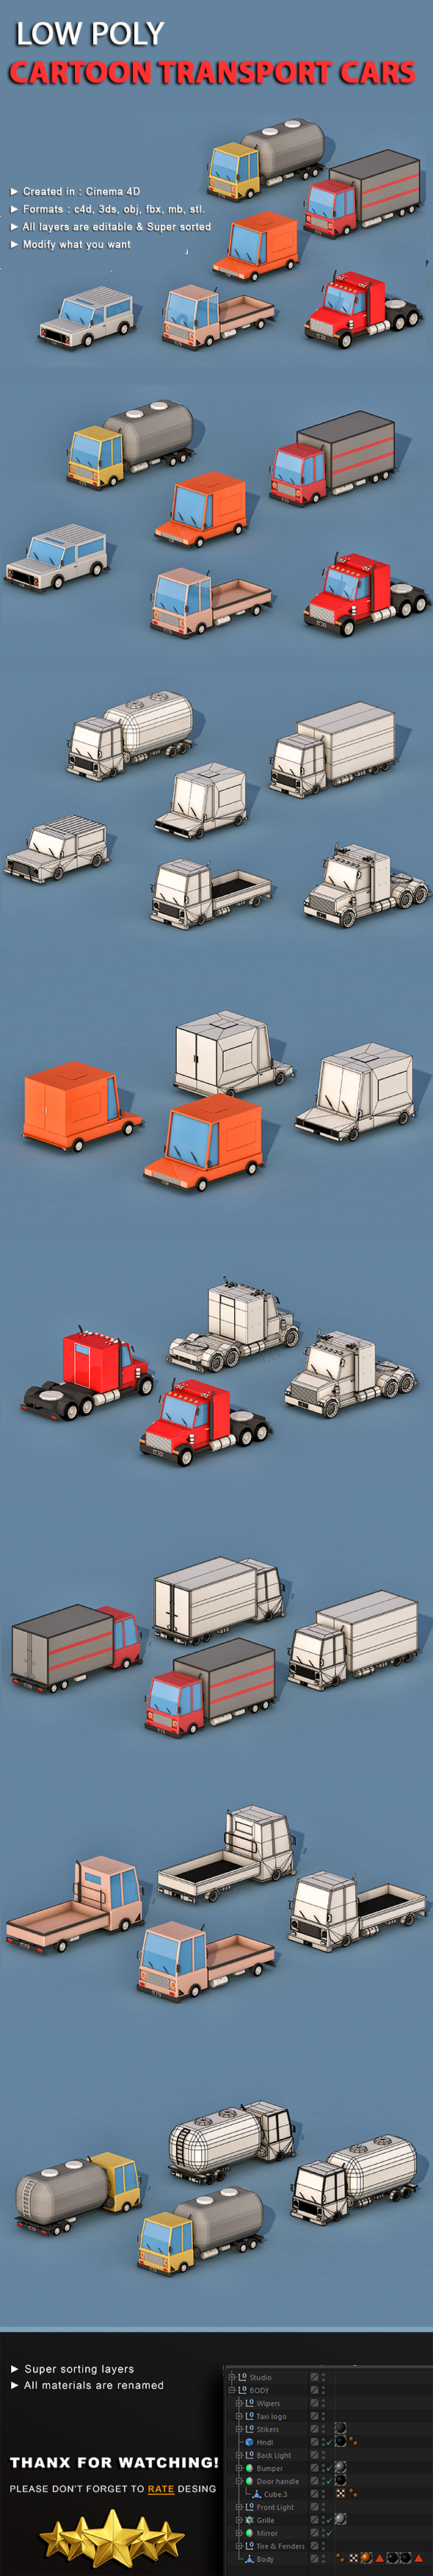 Cartoon Transport Cars - 3Docean 22935975